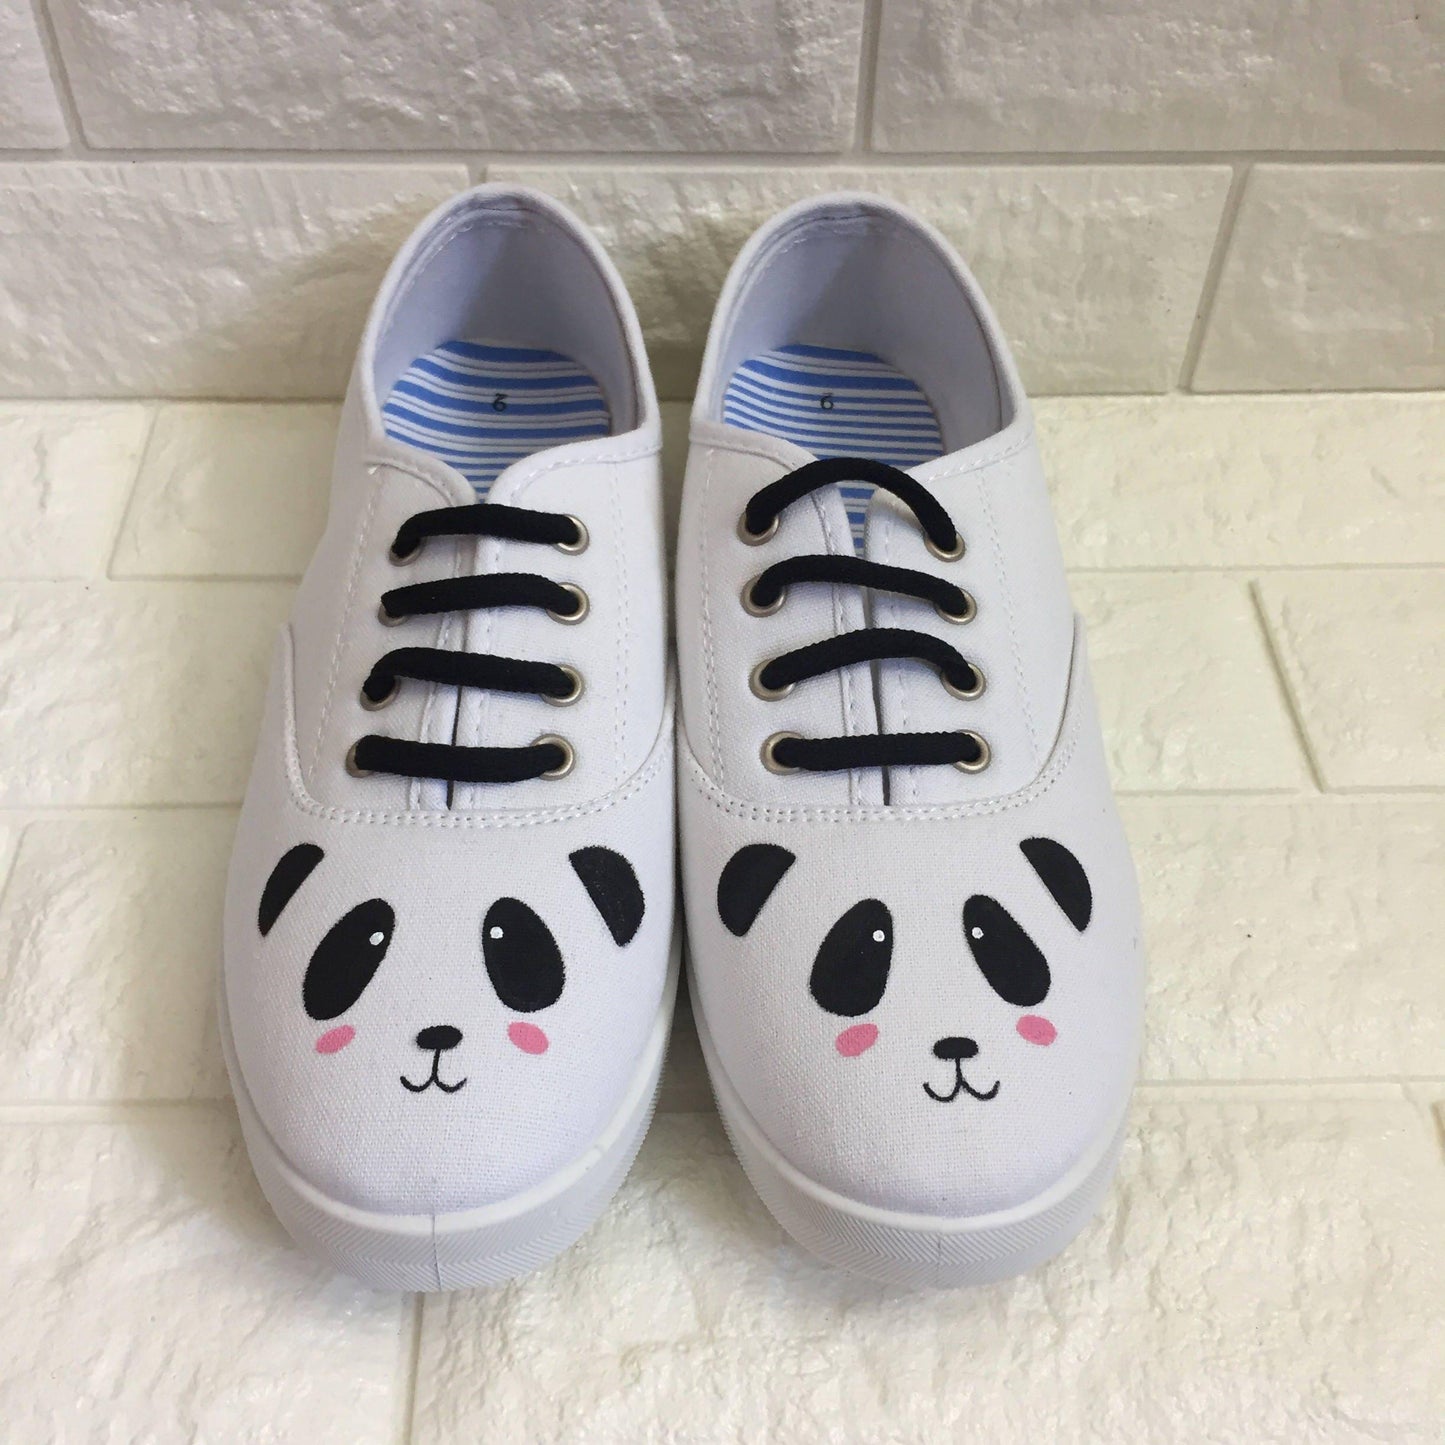 Panda Face Shoes